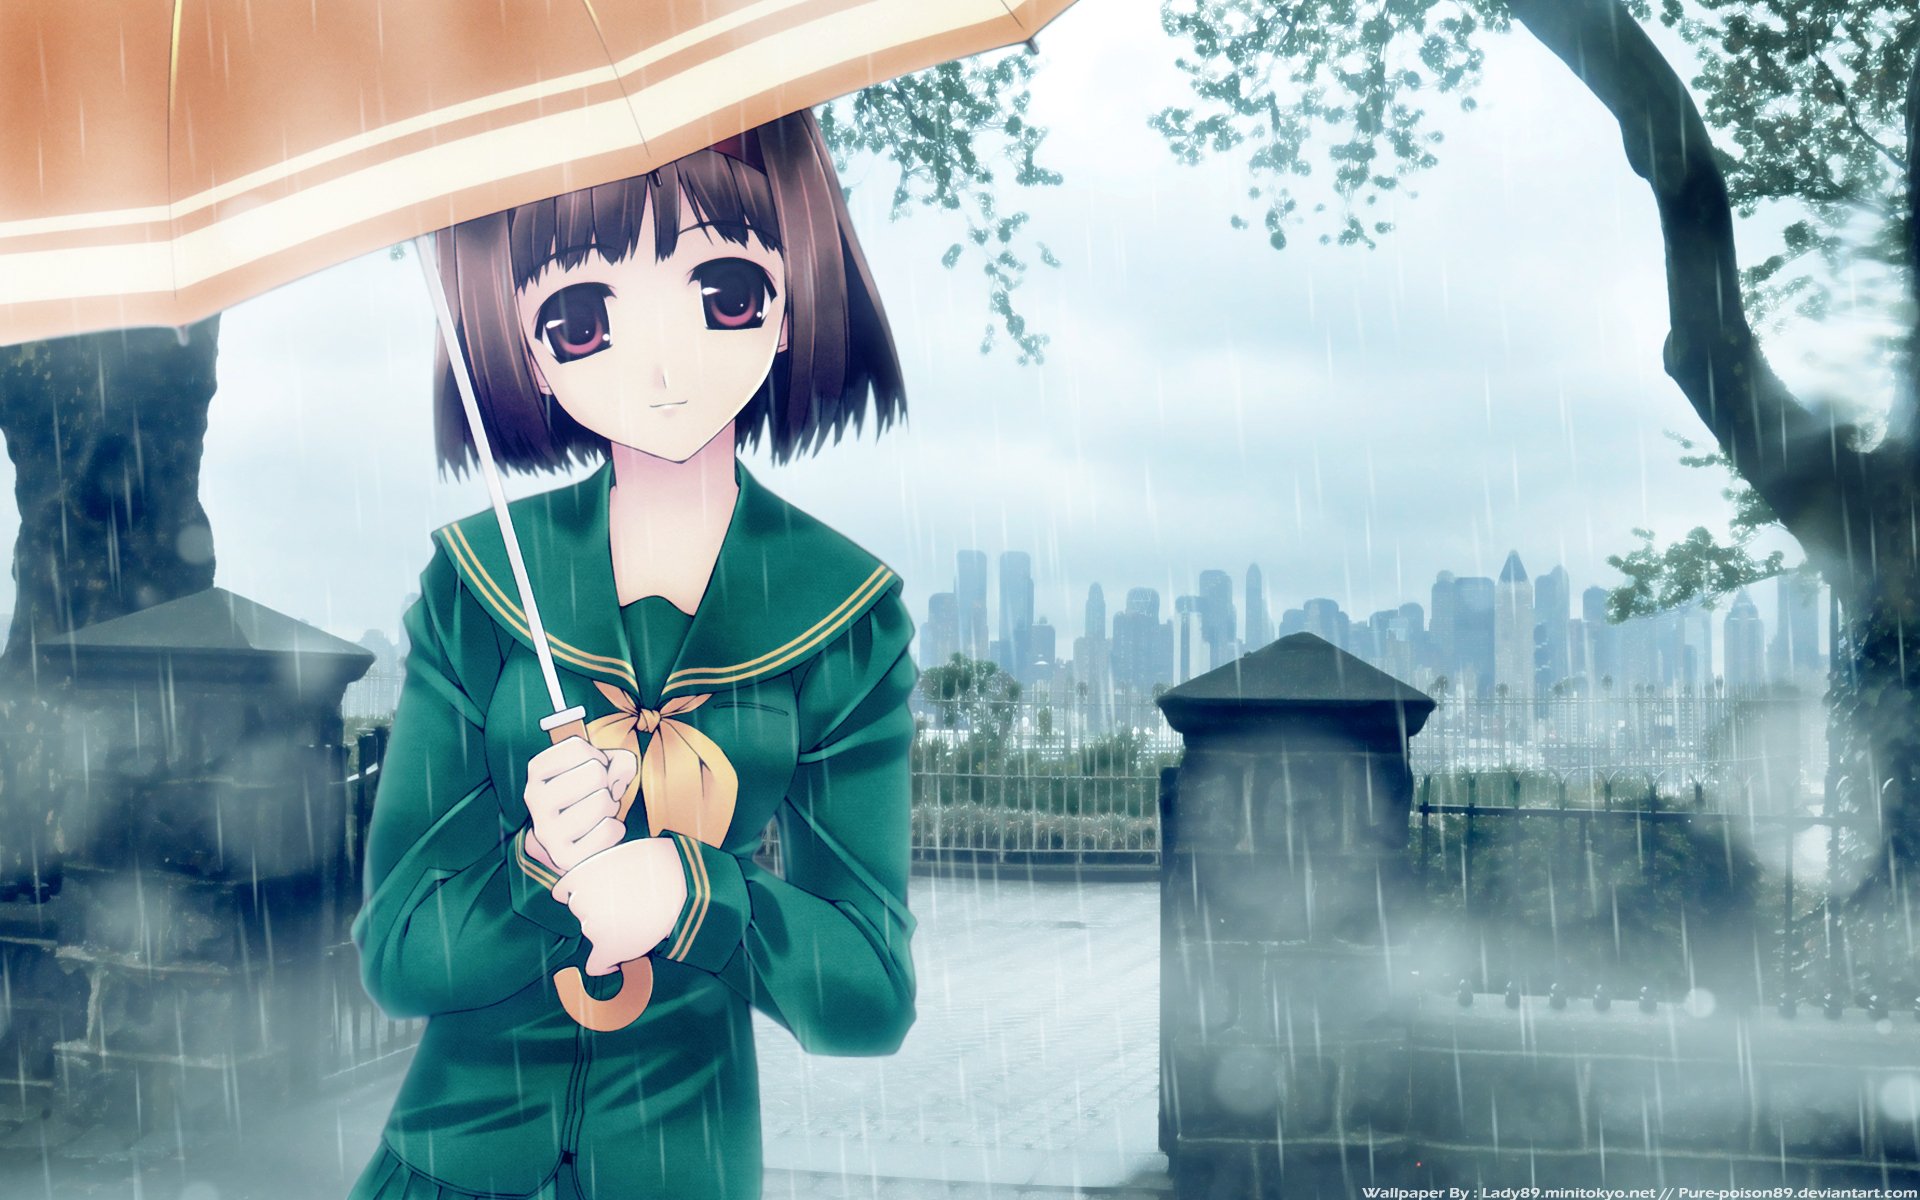 sad anime boy and girl in the rain